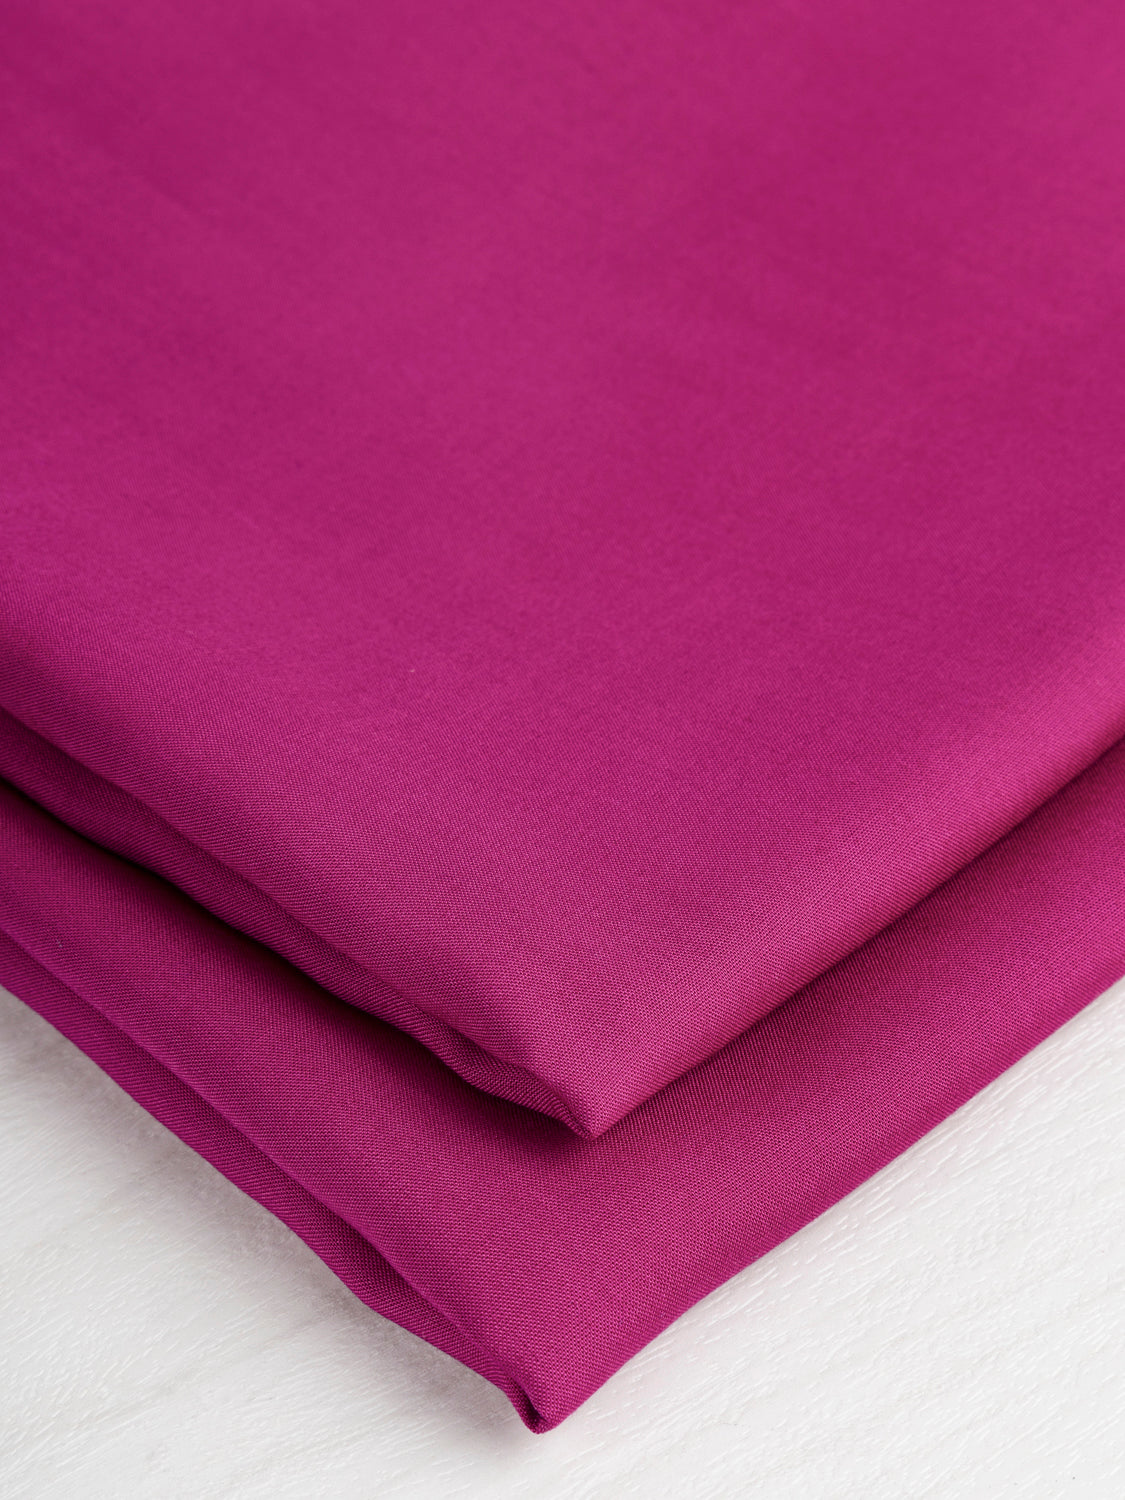 Signature Jewel Tone EcoVero Viscose - Tourmaline Pink | Core Fabrics